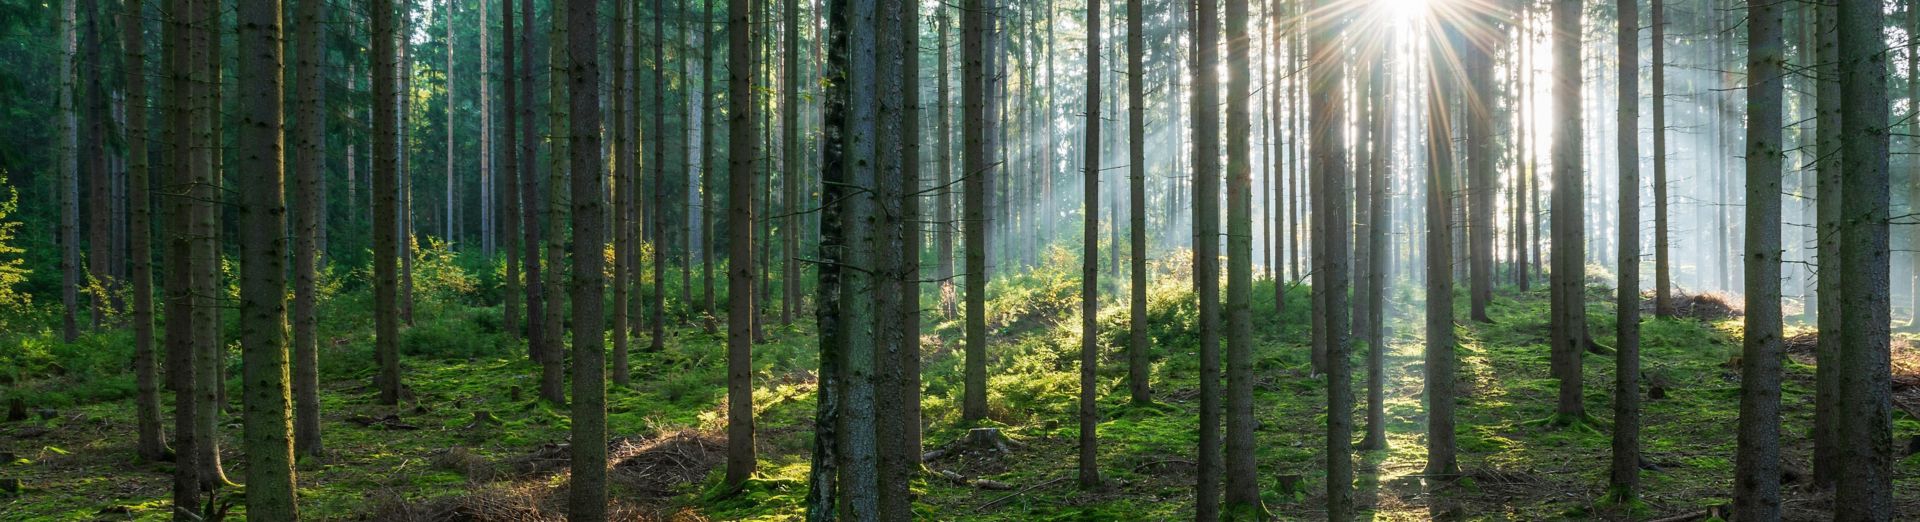 Light-flooded spruce forest